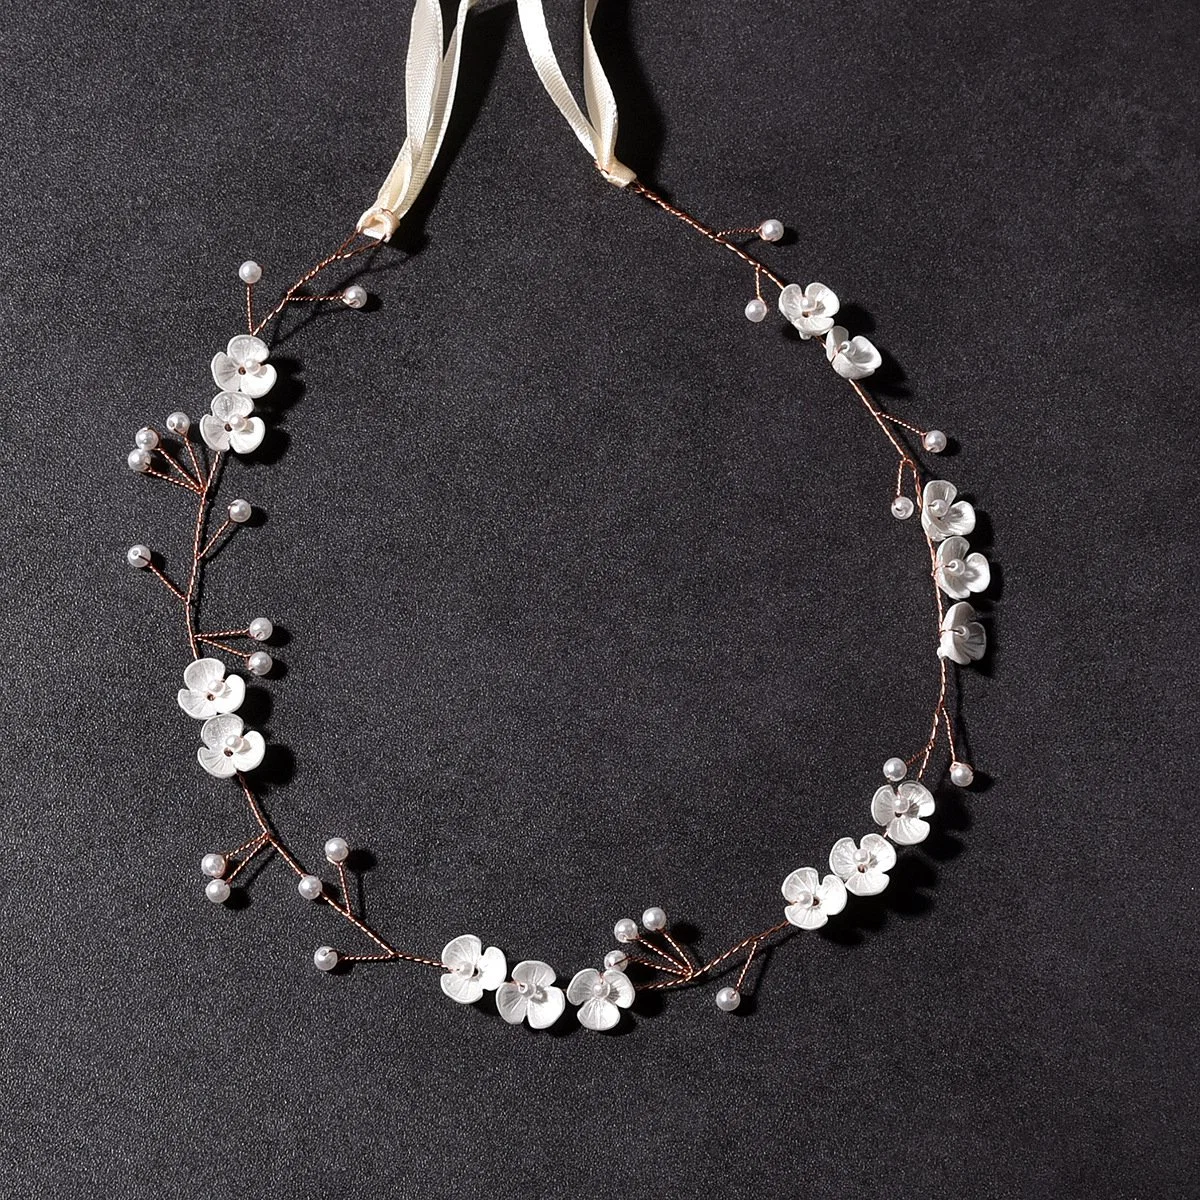 Handmade Women Girl Prom Party Ceramic Flower Bridal Jewelry Set Crystal Headpiece Wedding Hair Accessories